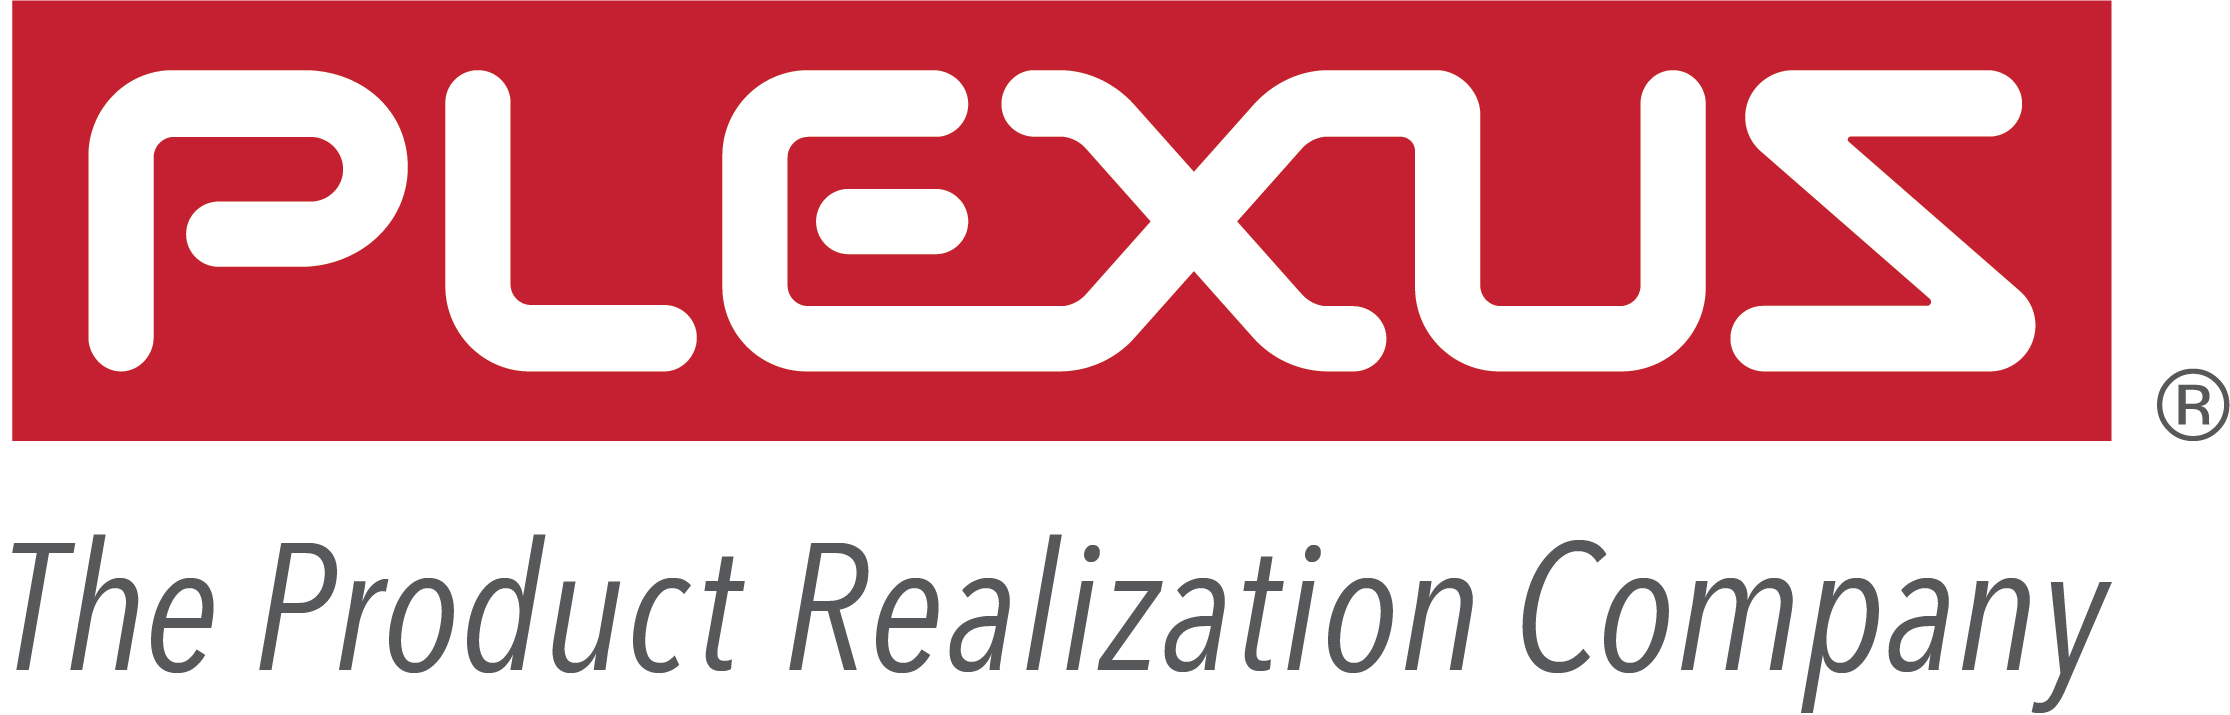 Plexus Logo Tagline 09OCT2017